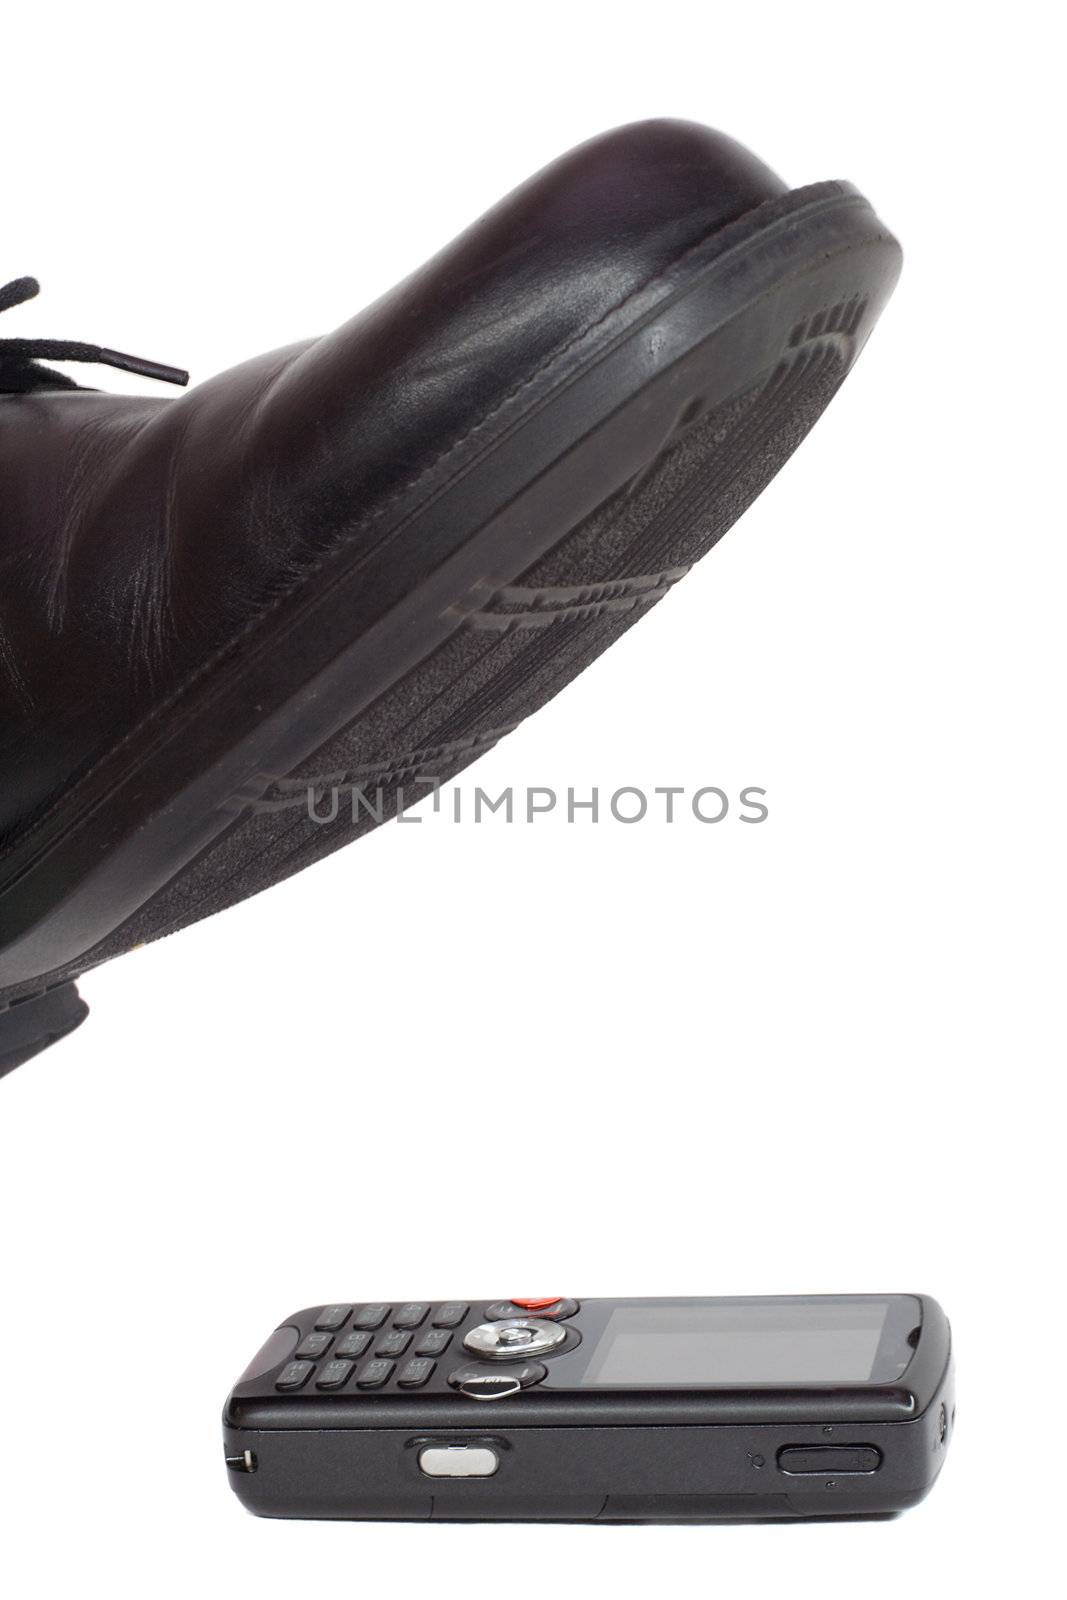 black shoe step on phone, isolated on white